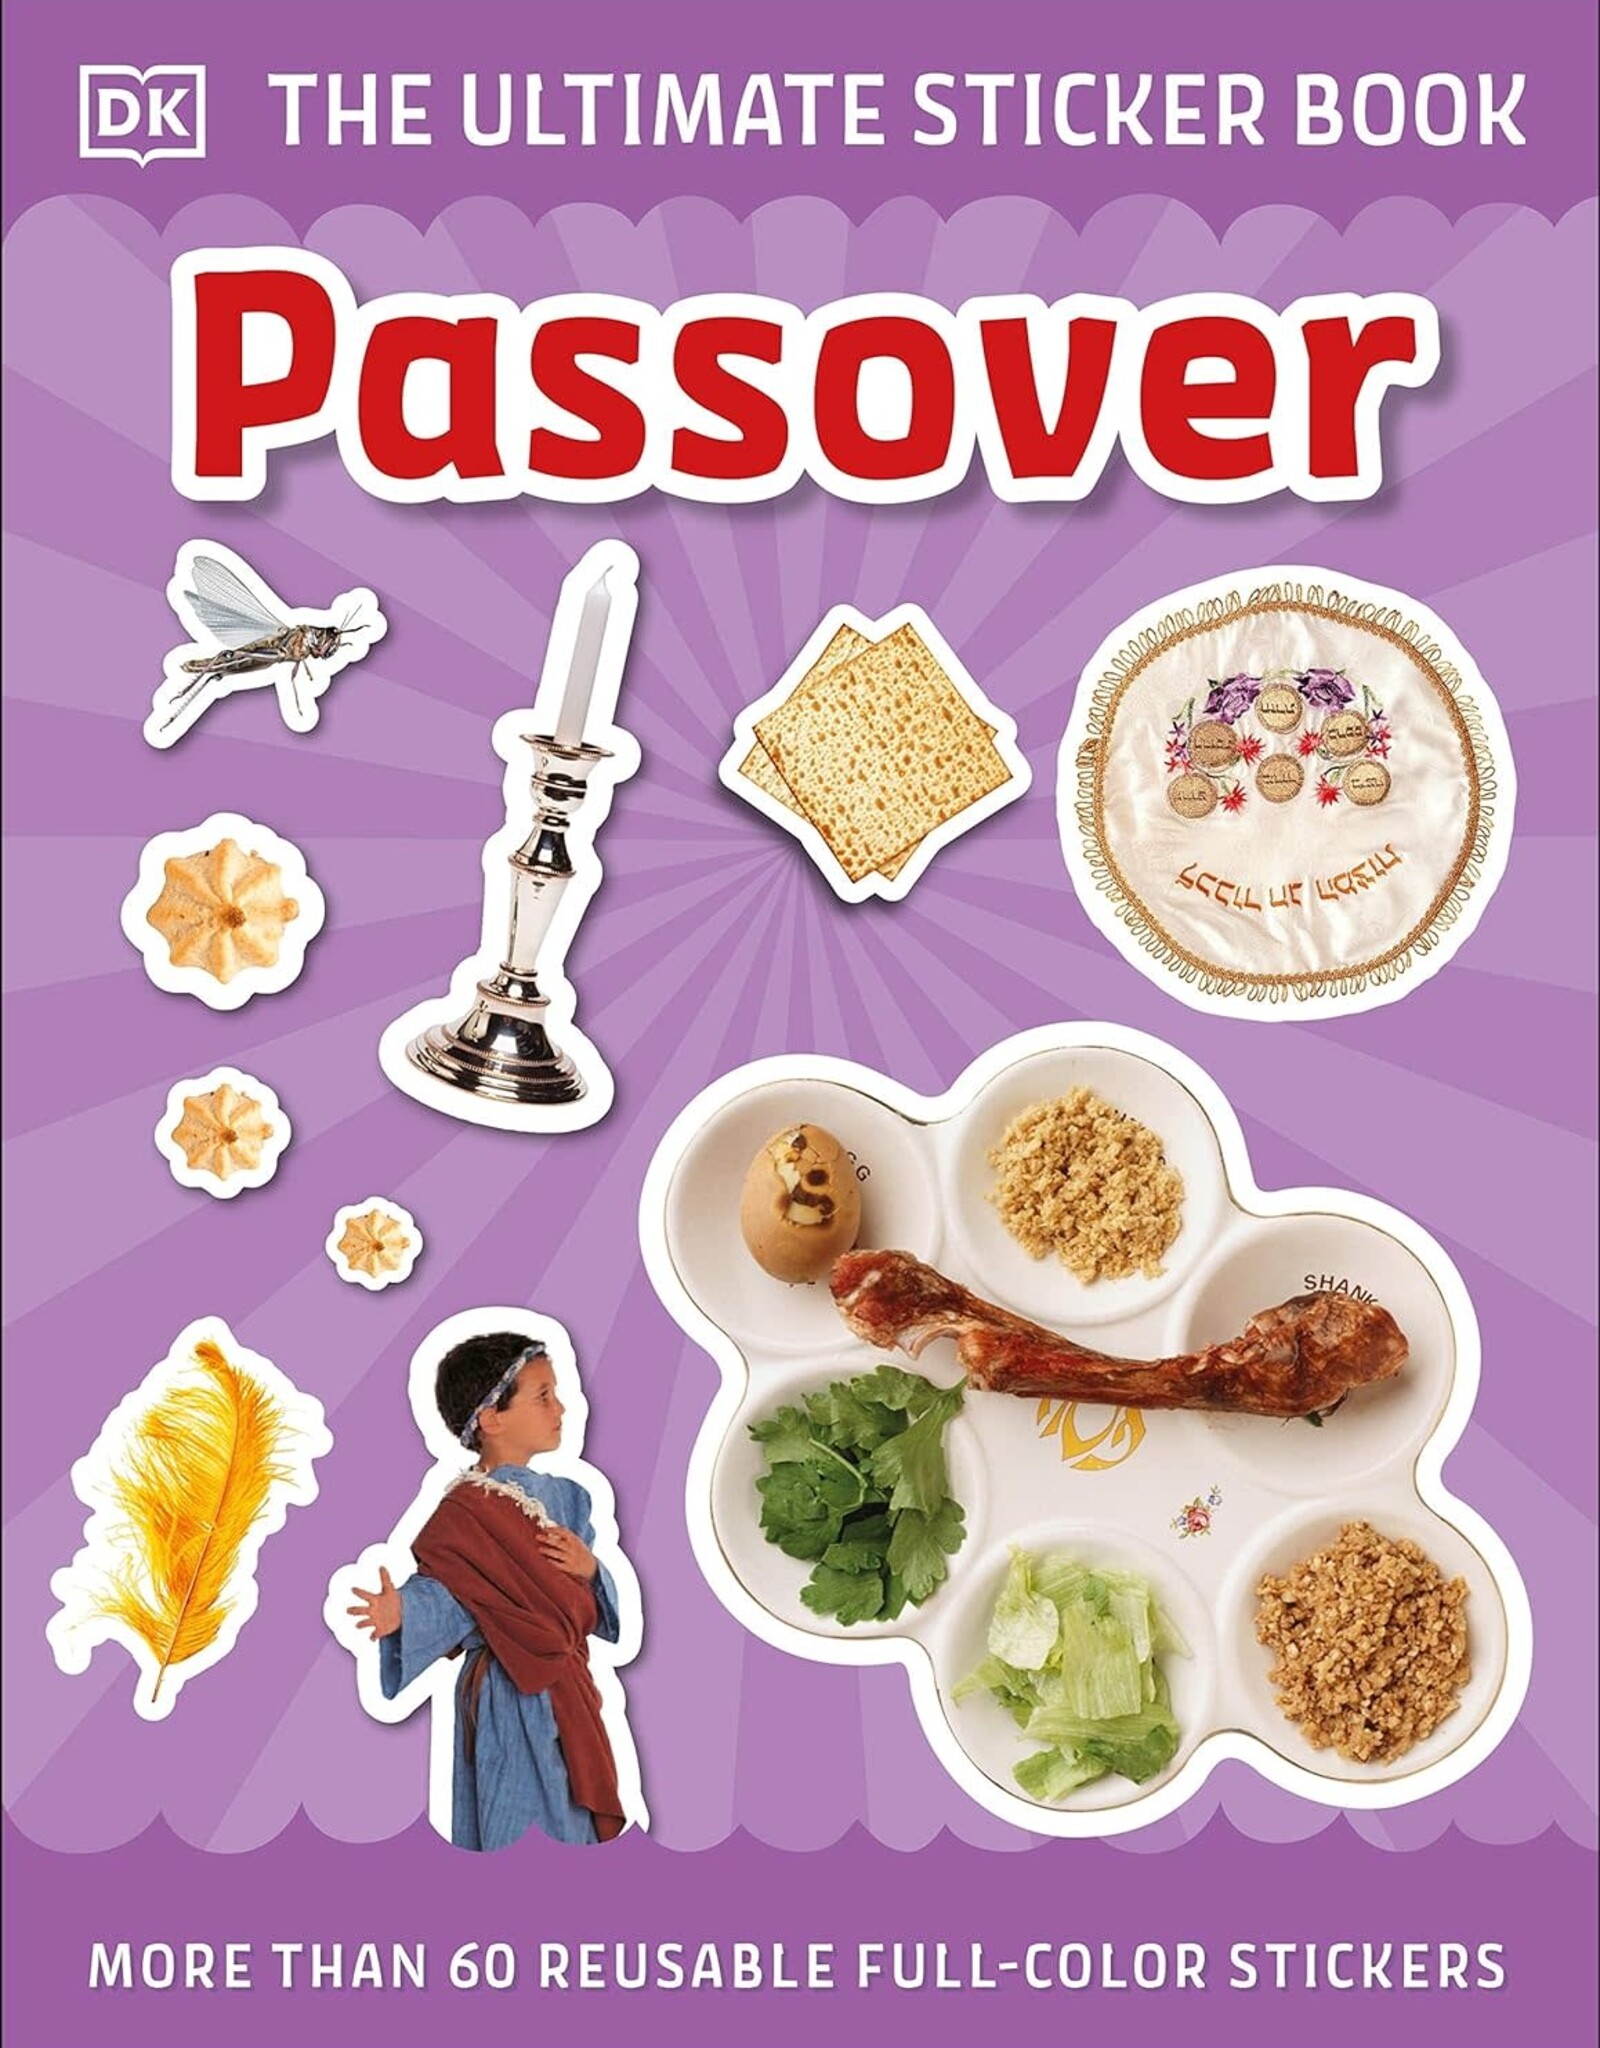 Random House/Penguin Ultimate Sticker Book: Passover